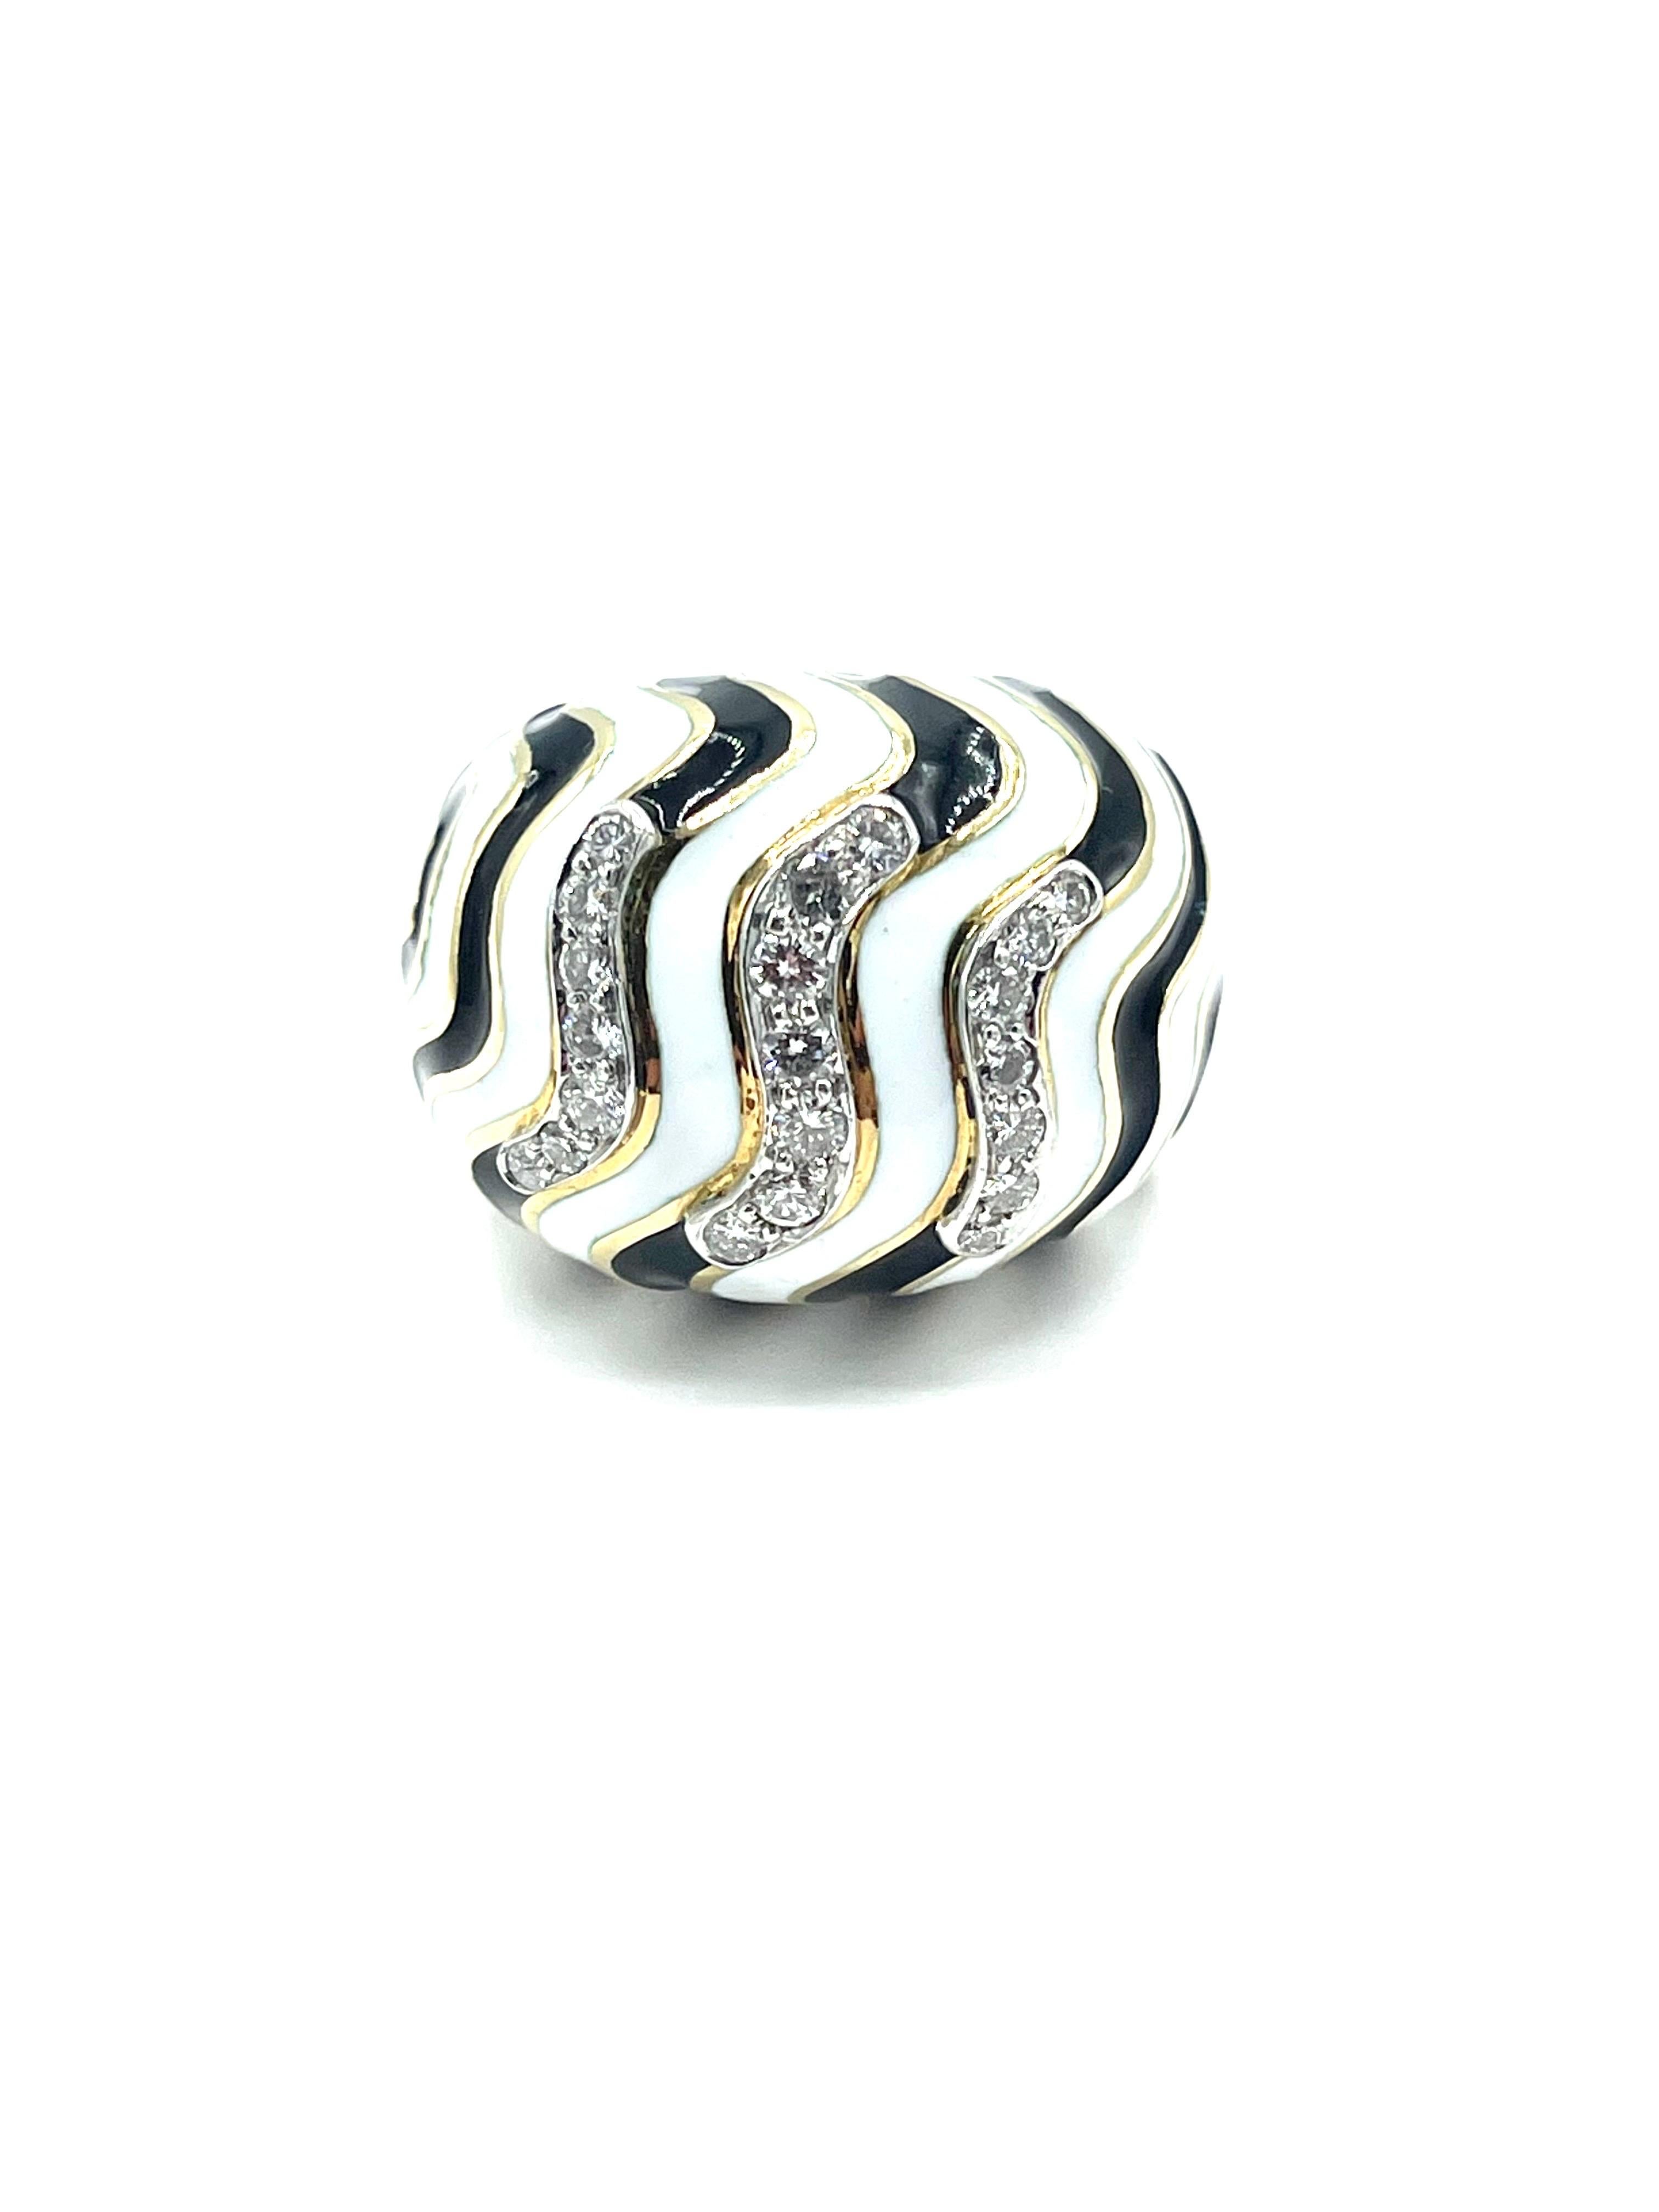 Retro David Webb 0.50 Carat Round Brilliant Diamond and Striped Enamel Cocktail Ring For Sale